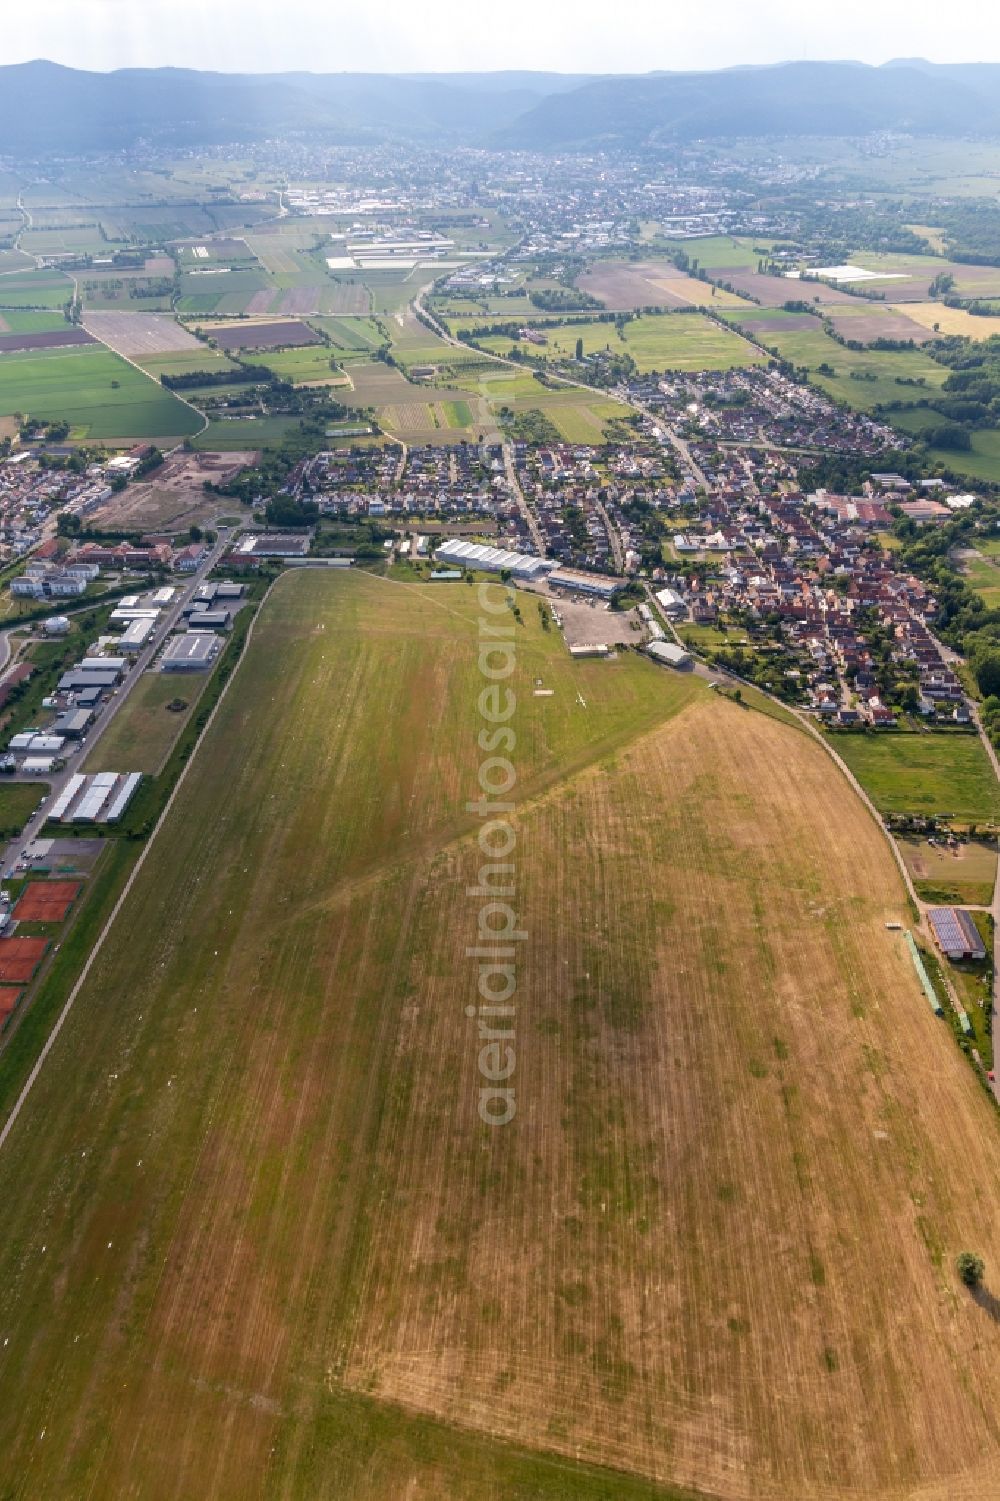 Lachen-Speyerdorf from the bird's eye view: Gliding field on the airfield of of FSV Neustadt in Lachen-Speyerdorf in the state Rhineland-Palatinate, Germany